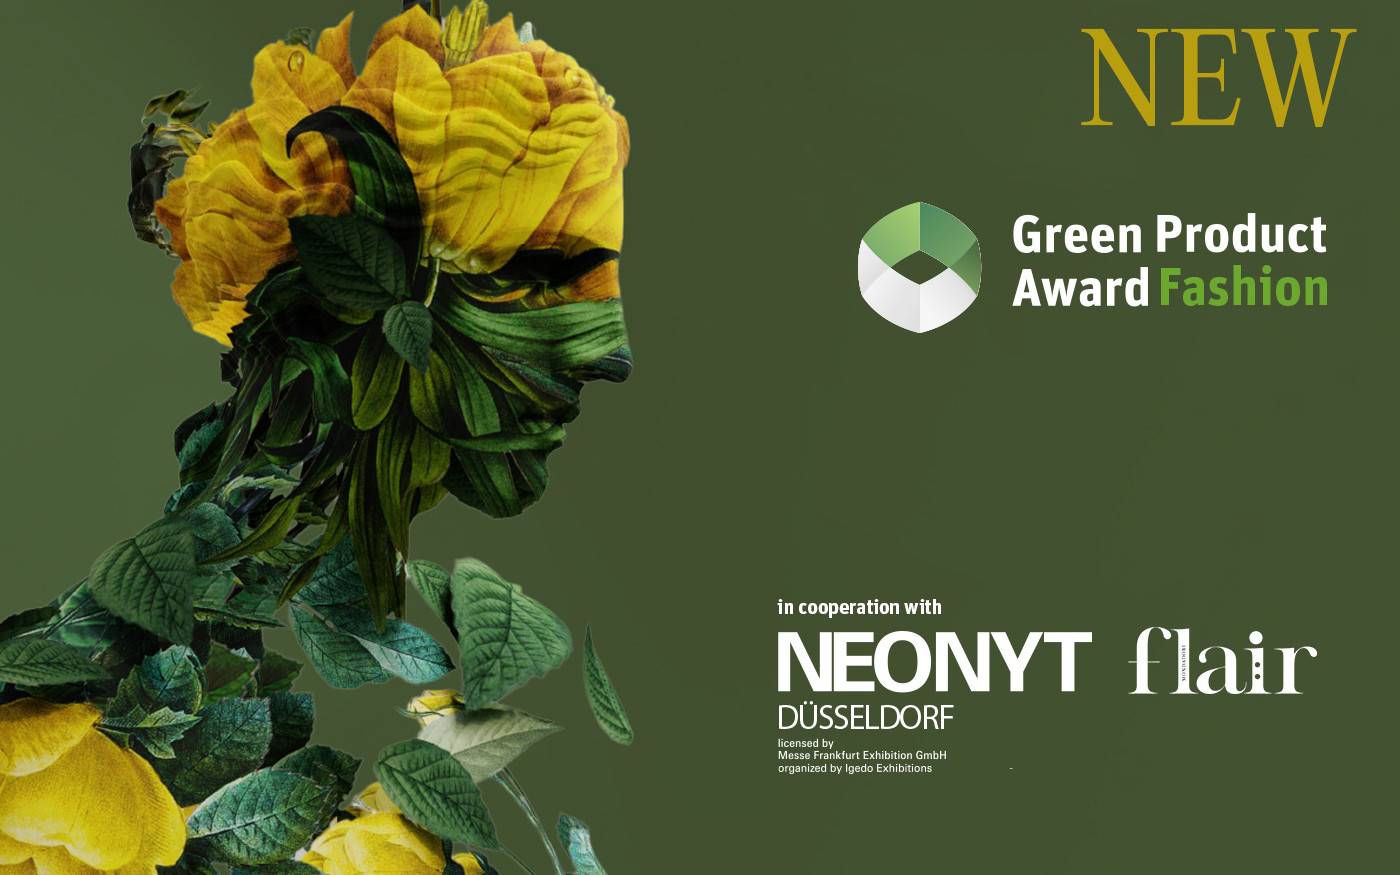 Green Product Award Fashion